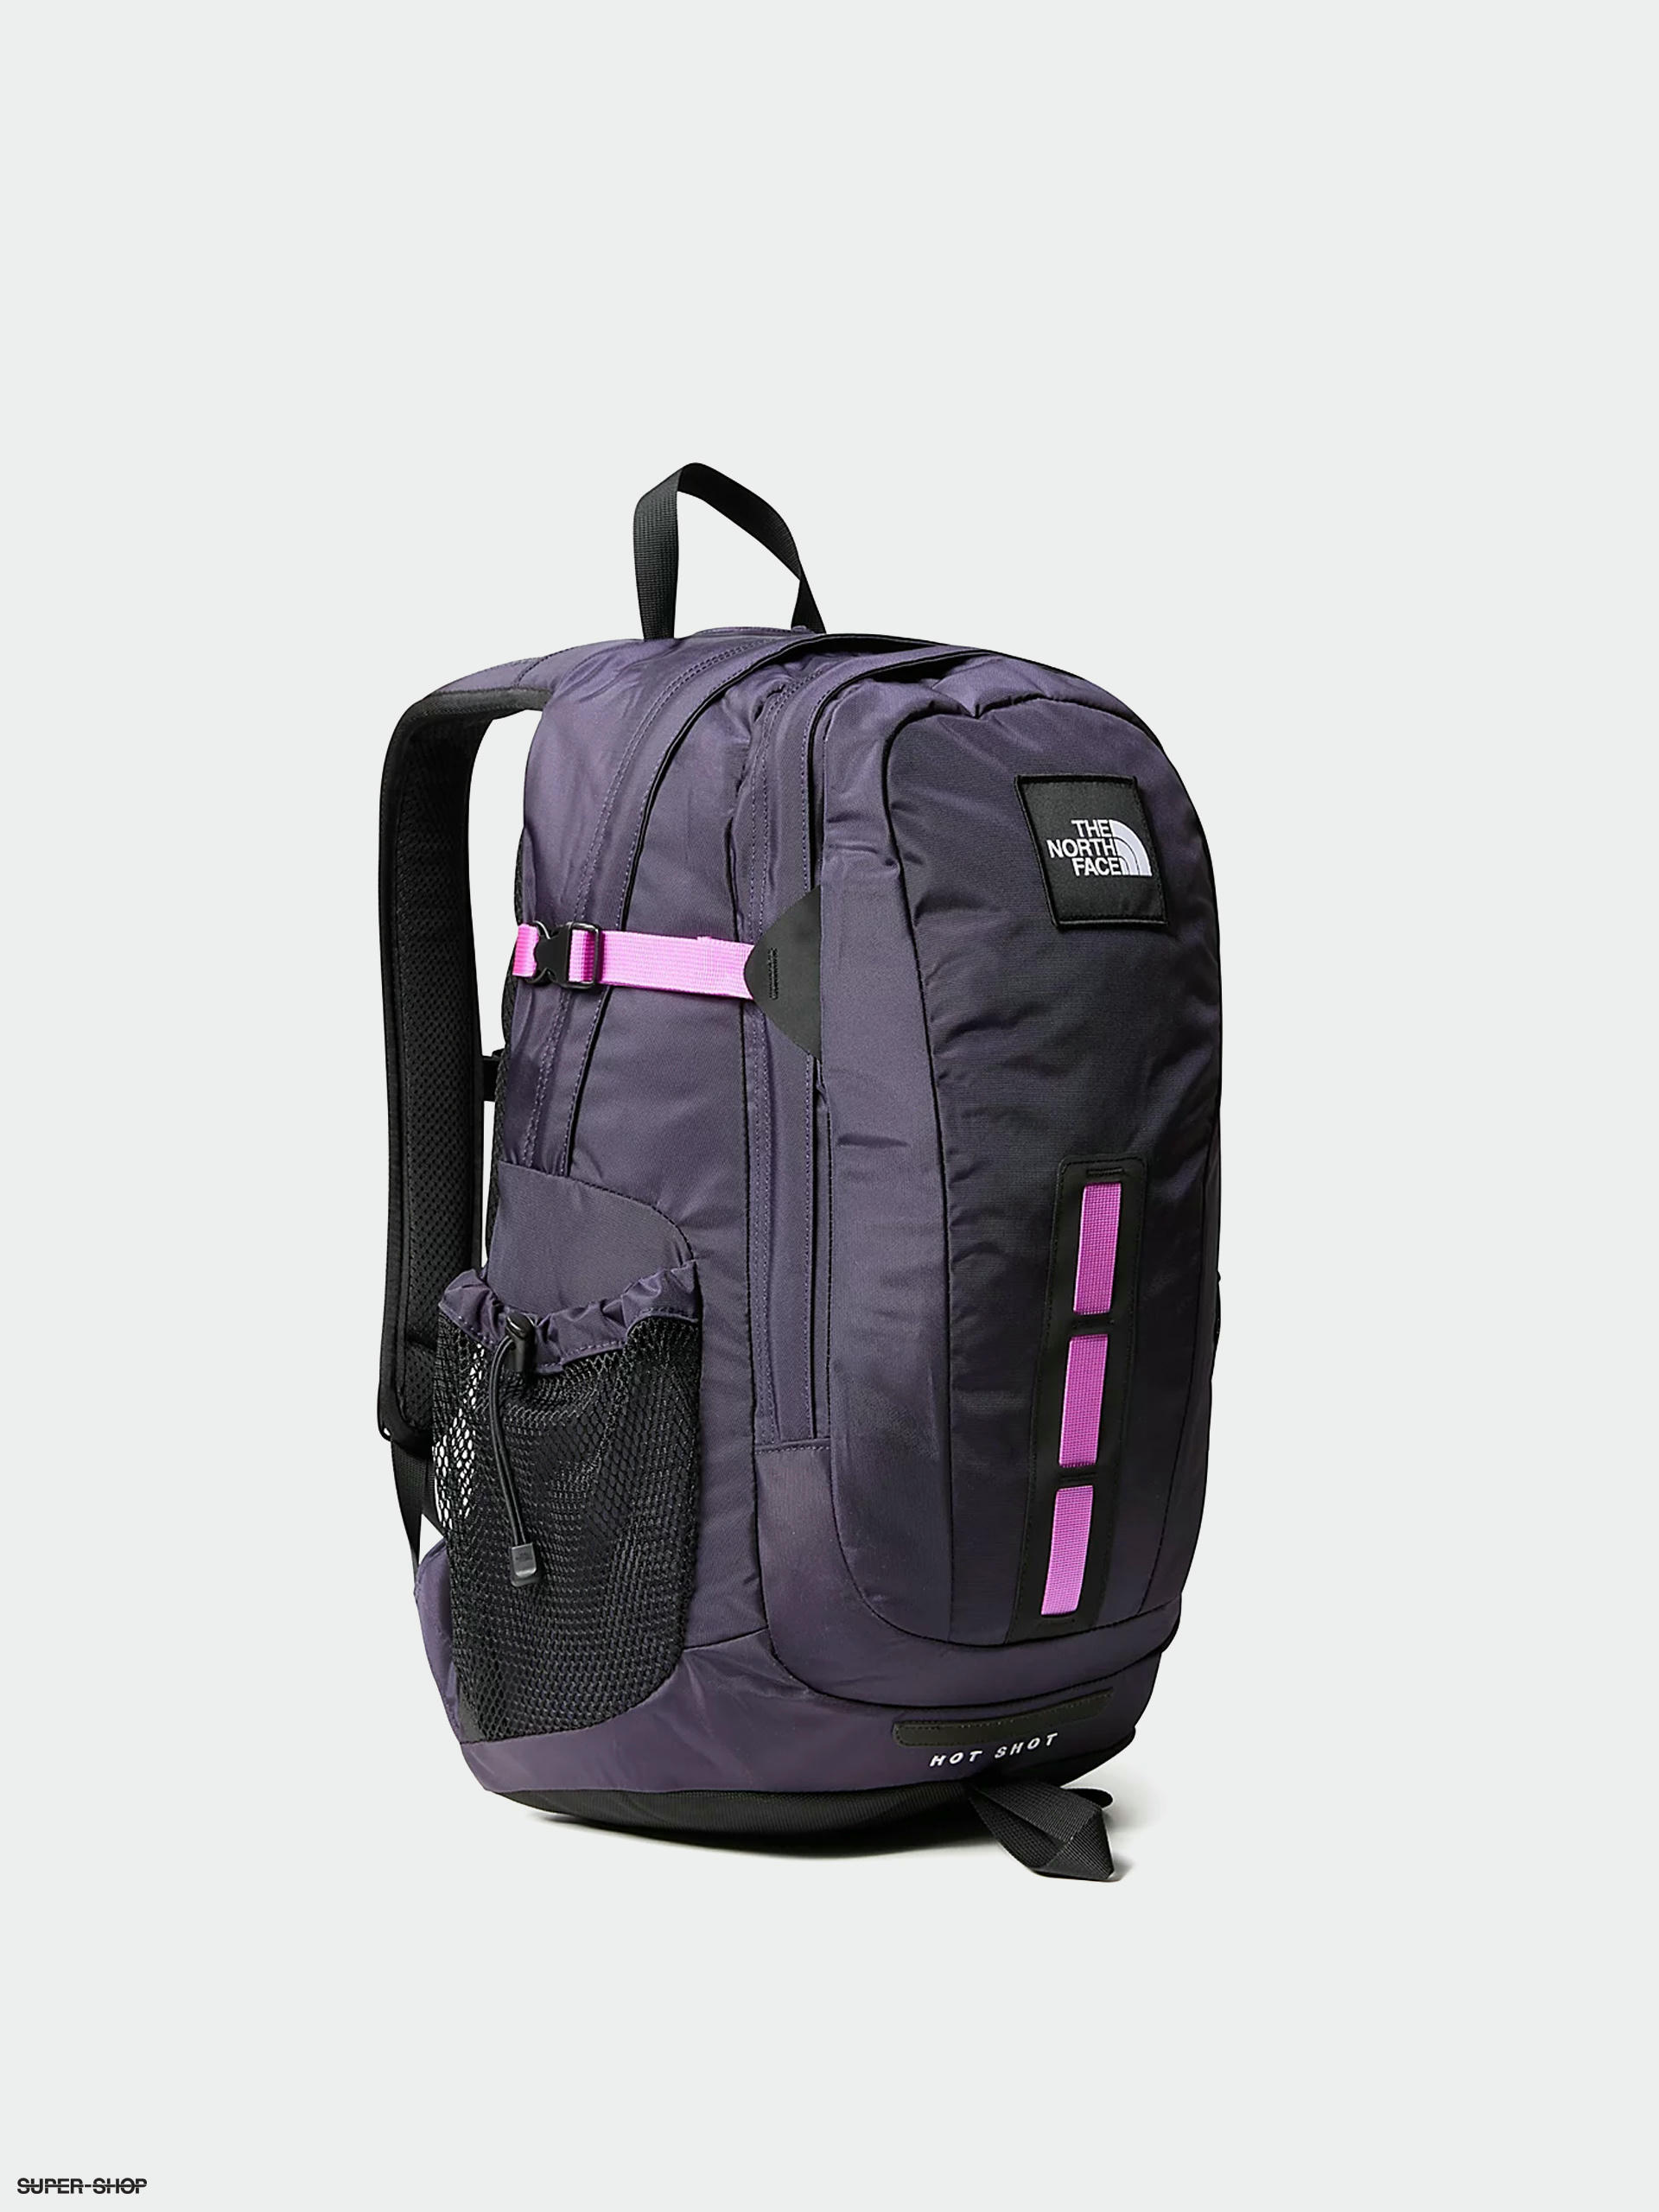 HOT SHOT HOTSHOT BAG|School Bag|Tuition Bag|Office Bag|College  Backpack|With RainCover 30 L Backpack Grey - Price in India | Flipkart.com